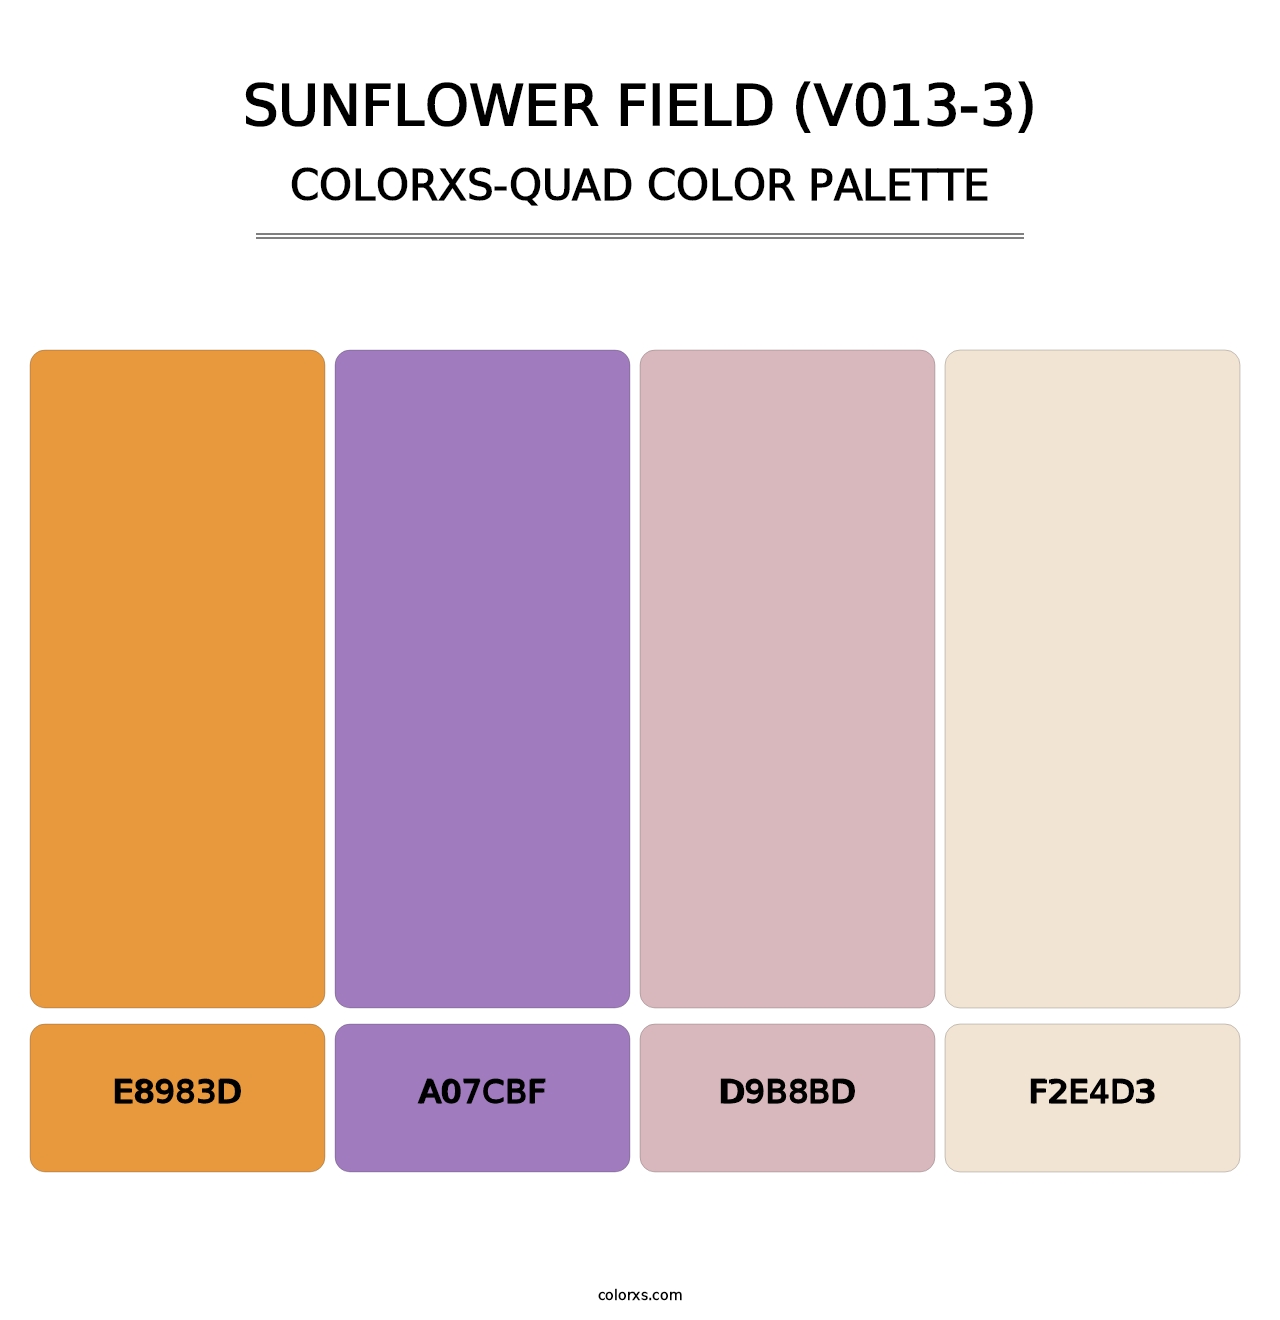 Sunflower Field (V013-3) - Colorxs Quad Palette